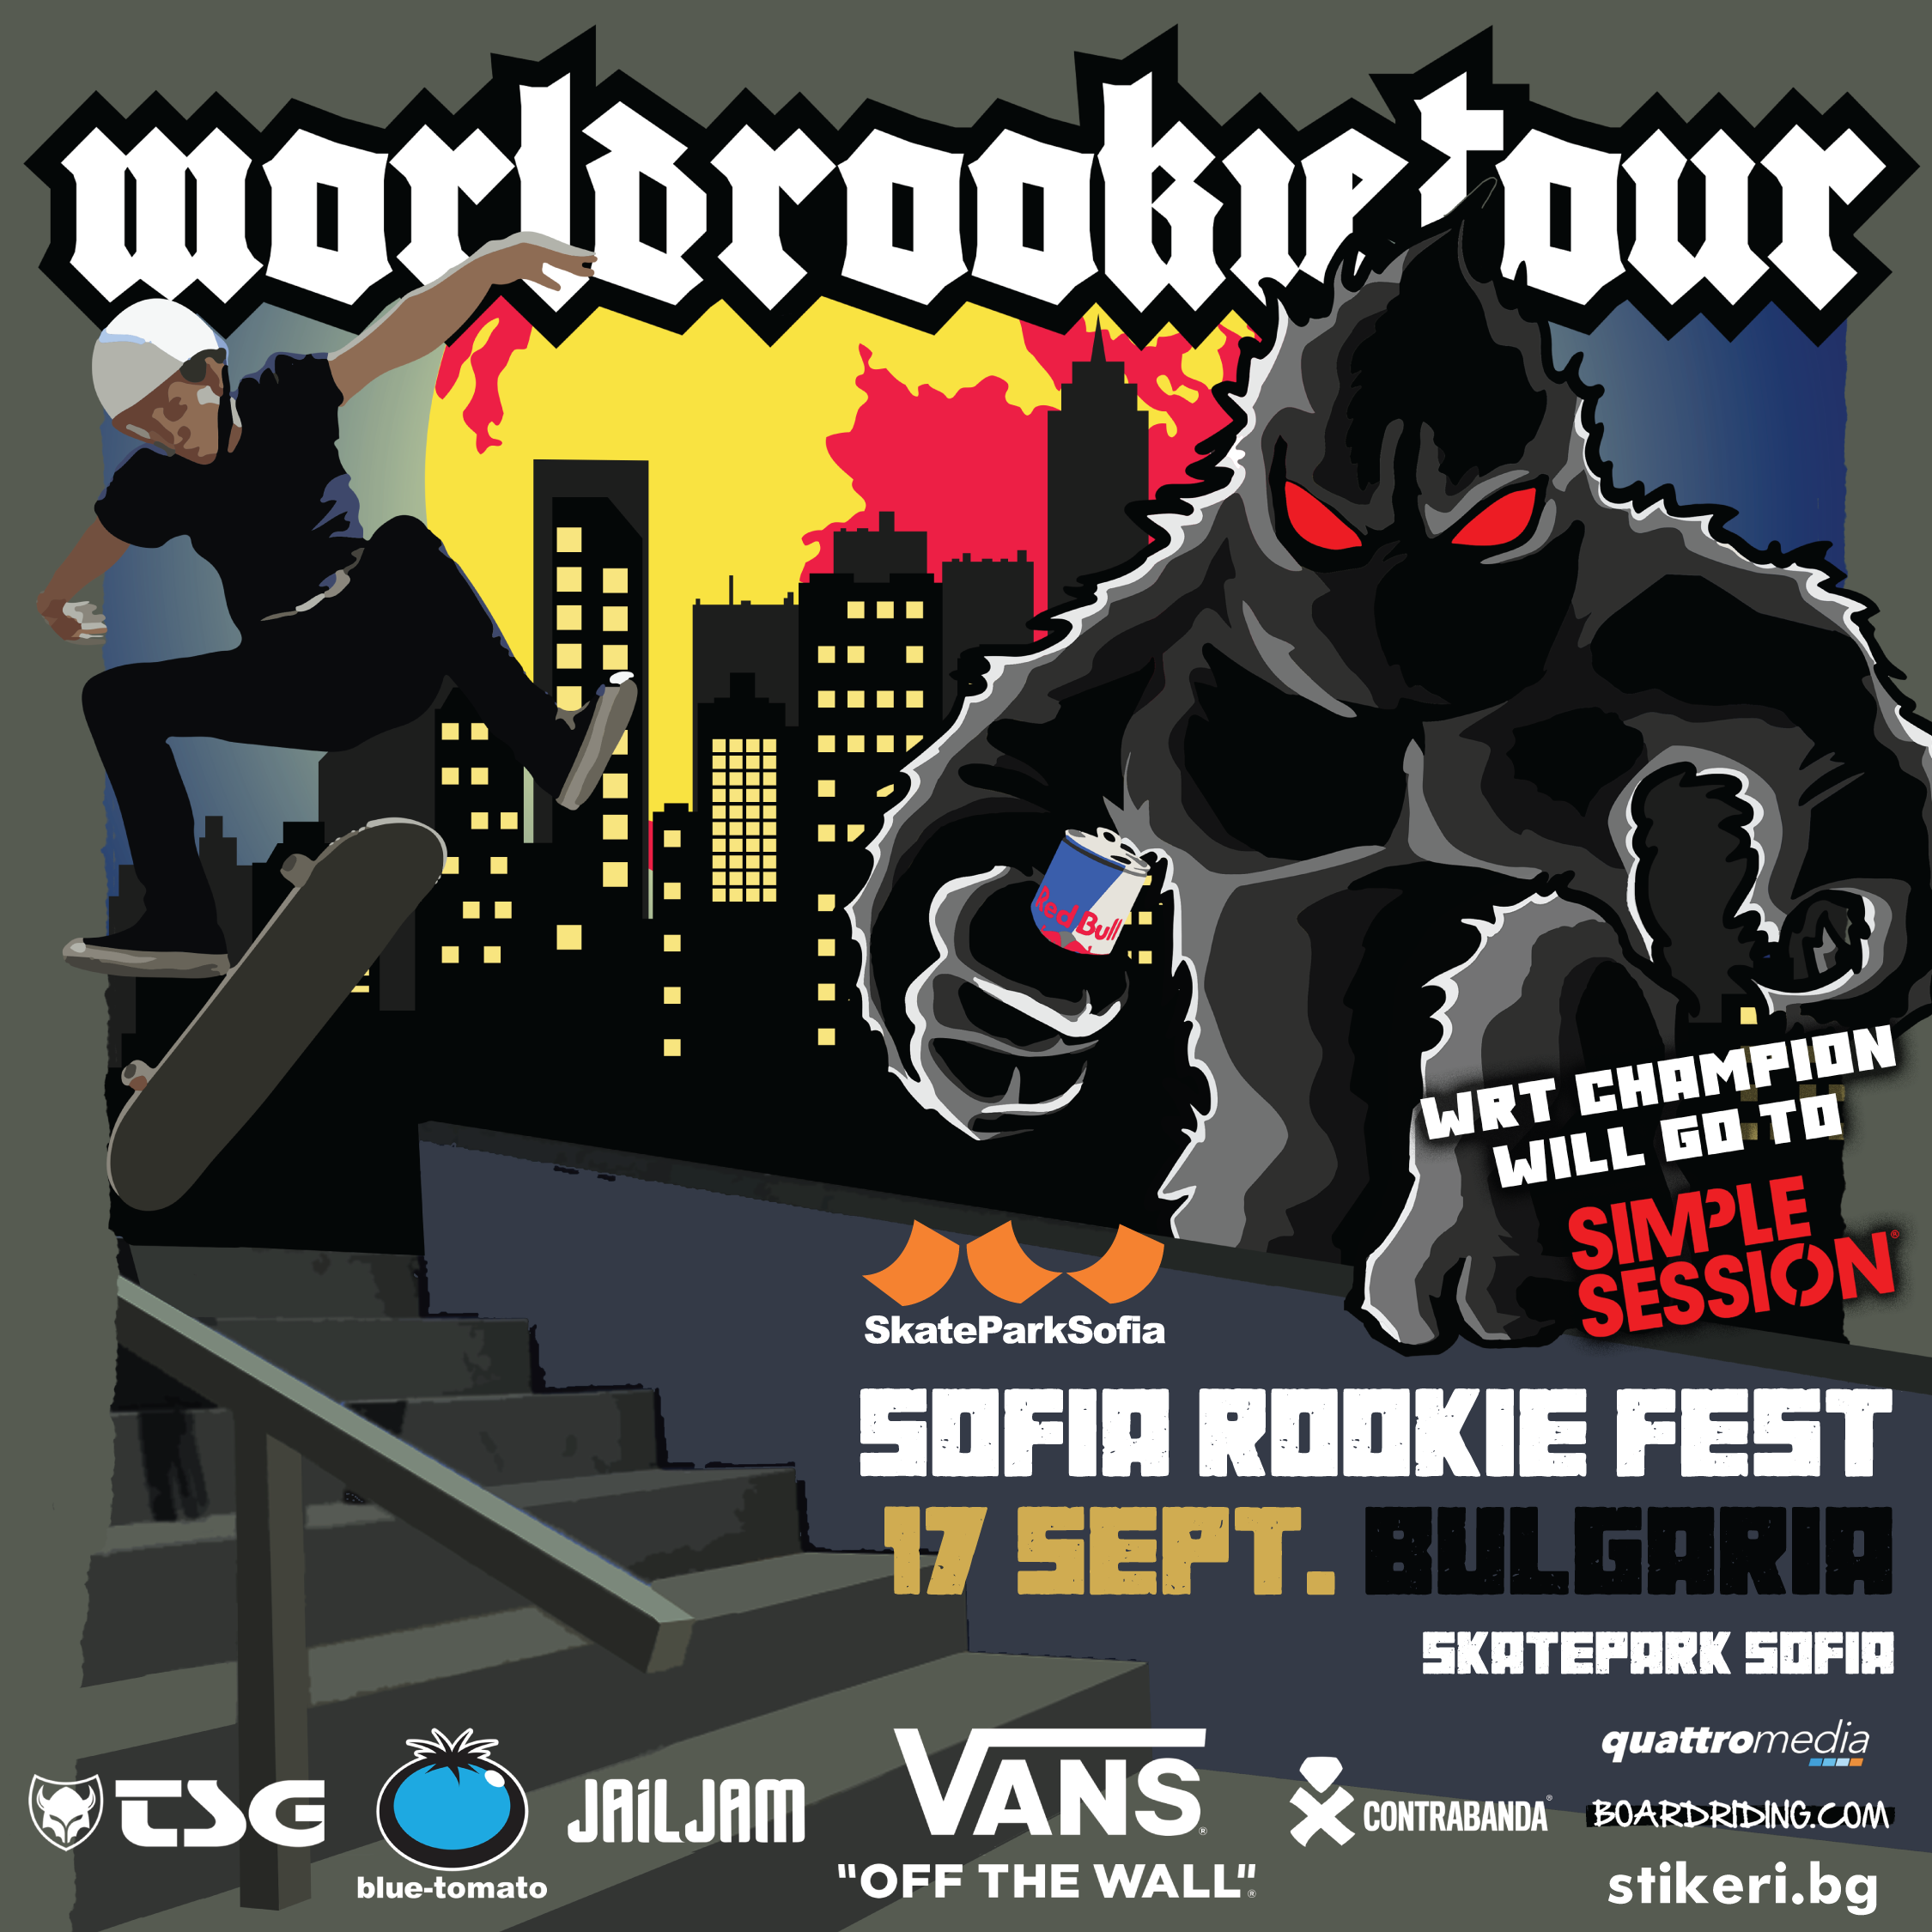 World Rookie Tour – Sofia Rookie Fest!